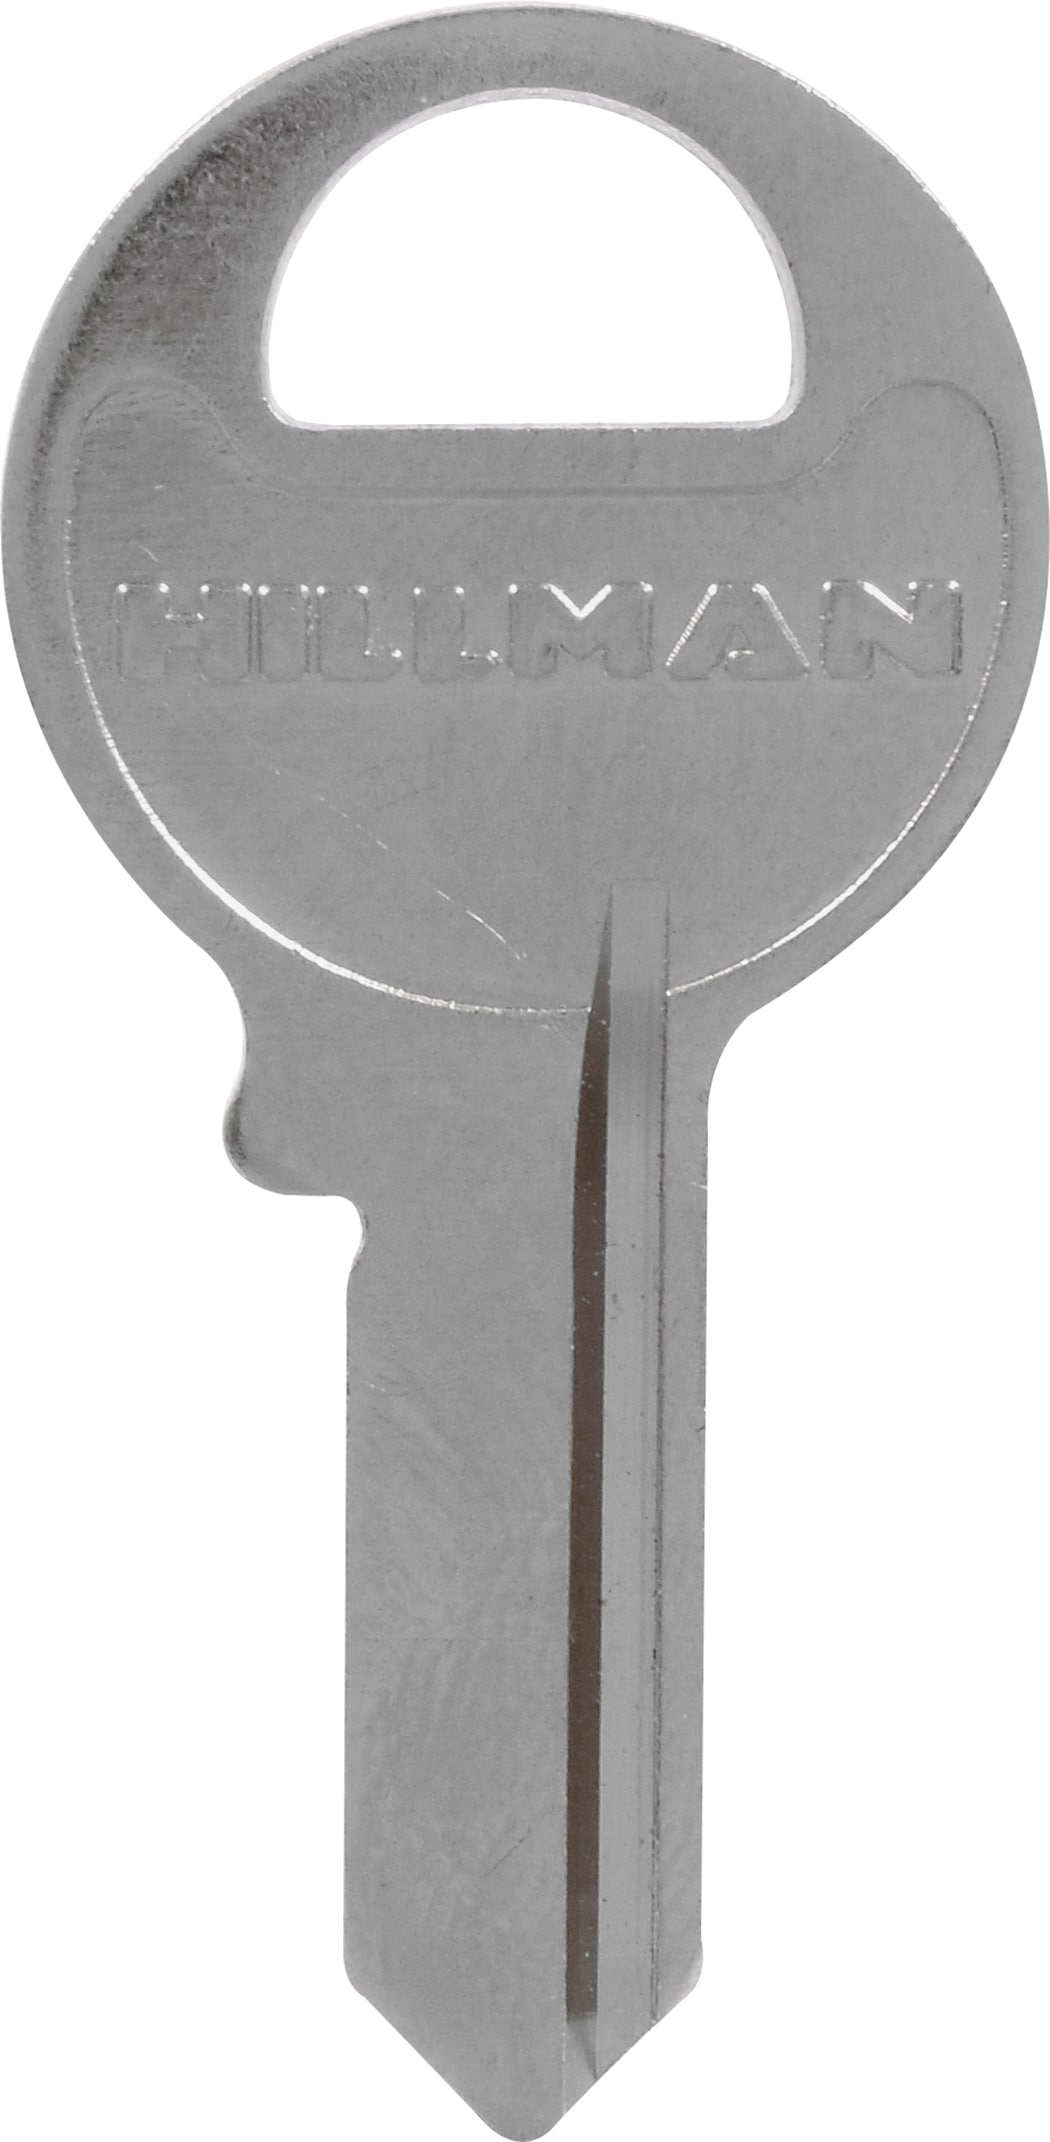 Hillman KeyKrafter House/Office Universal Key Blank Single Sided